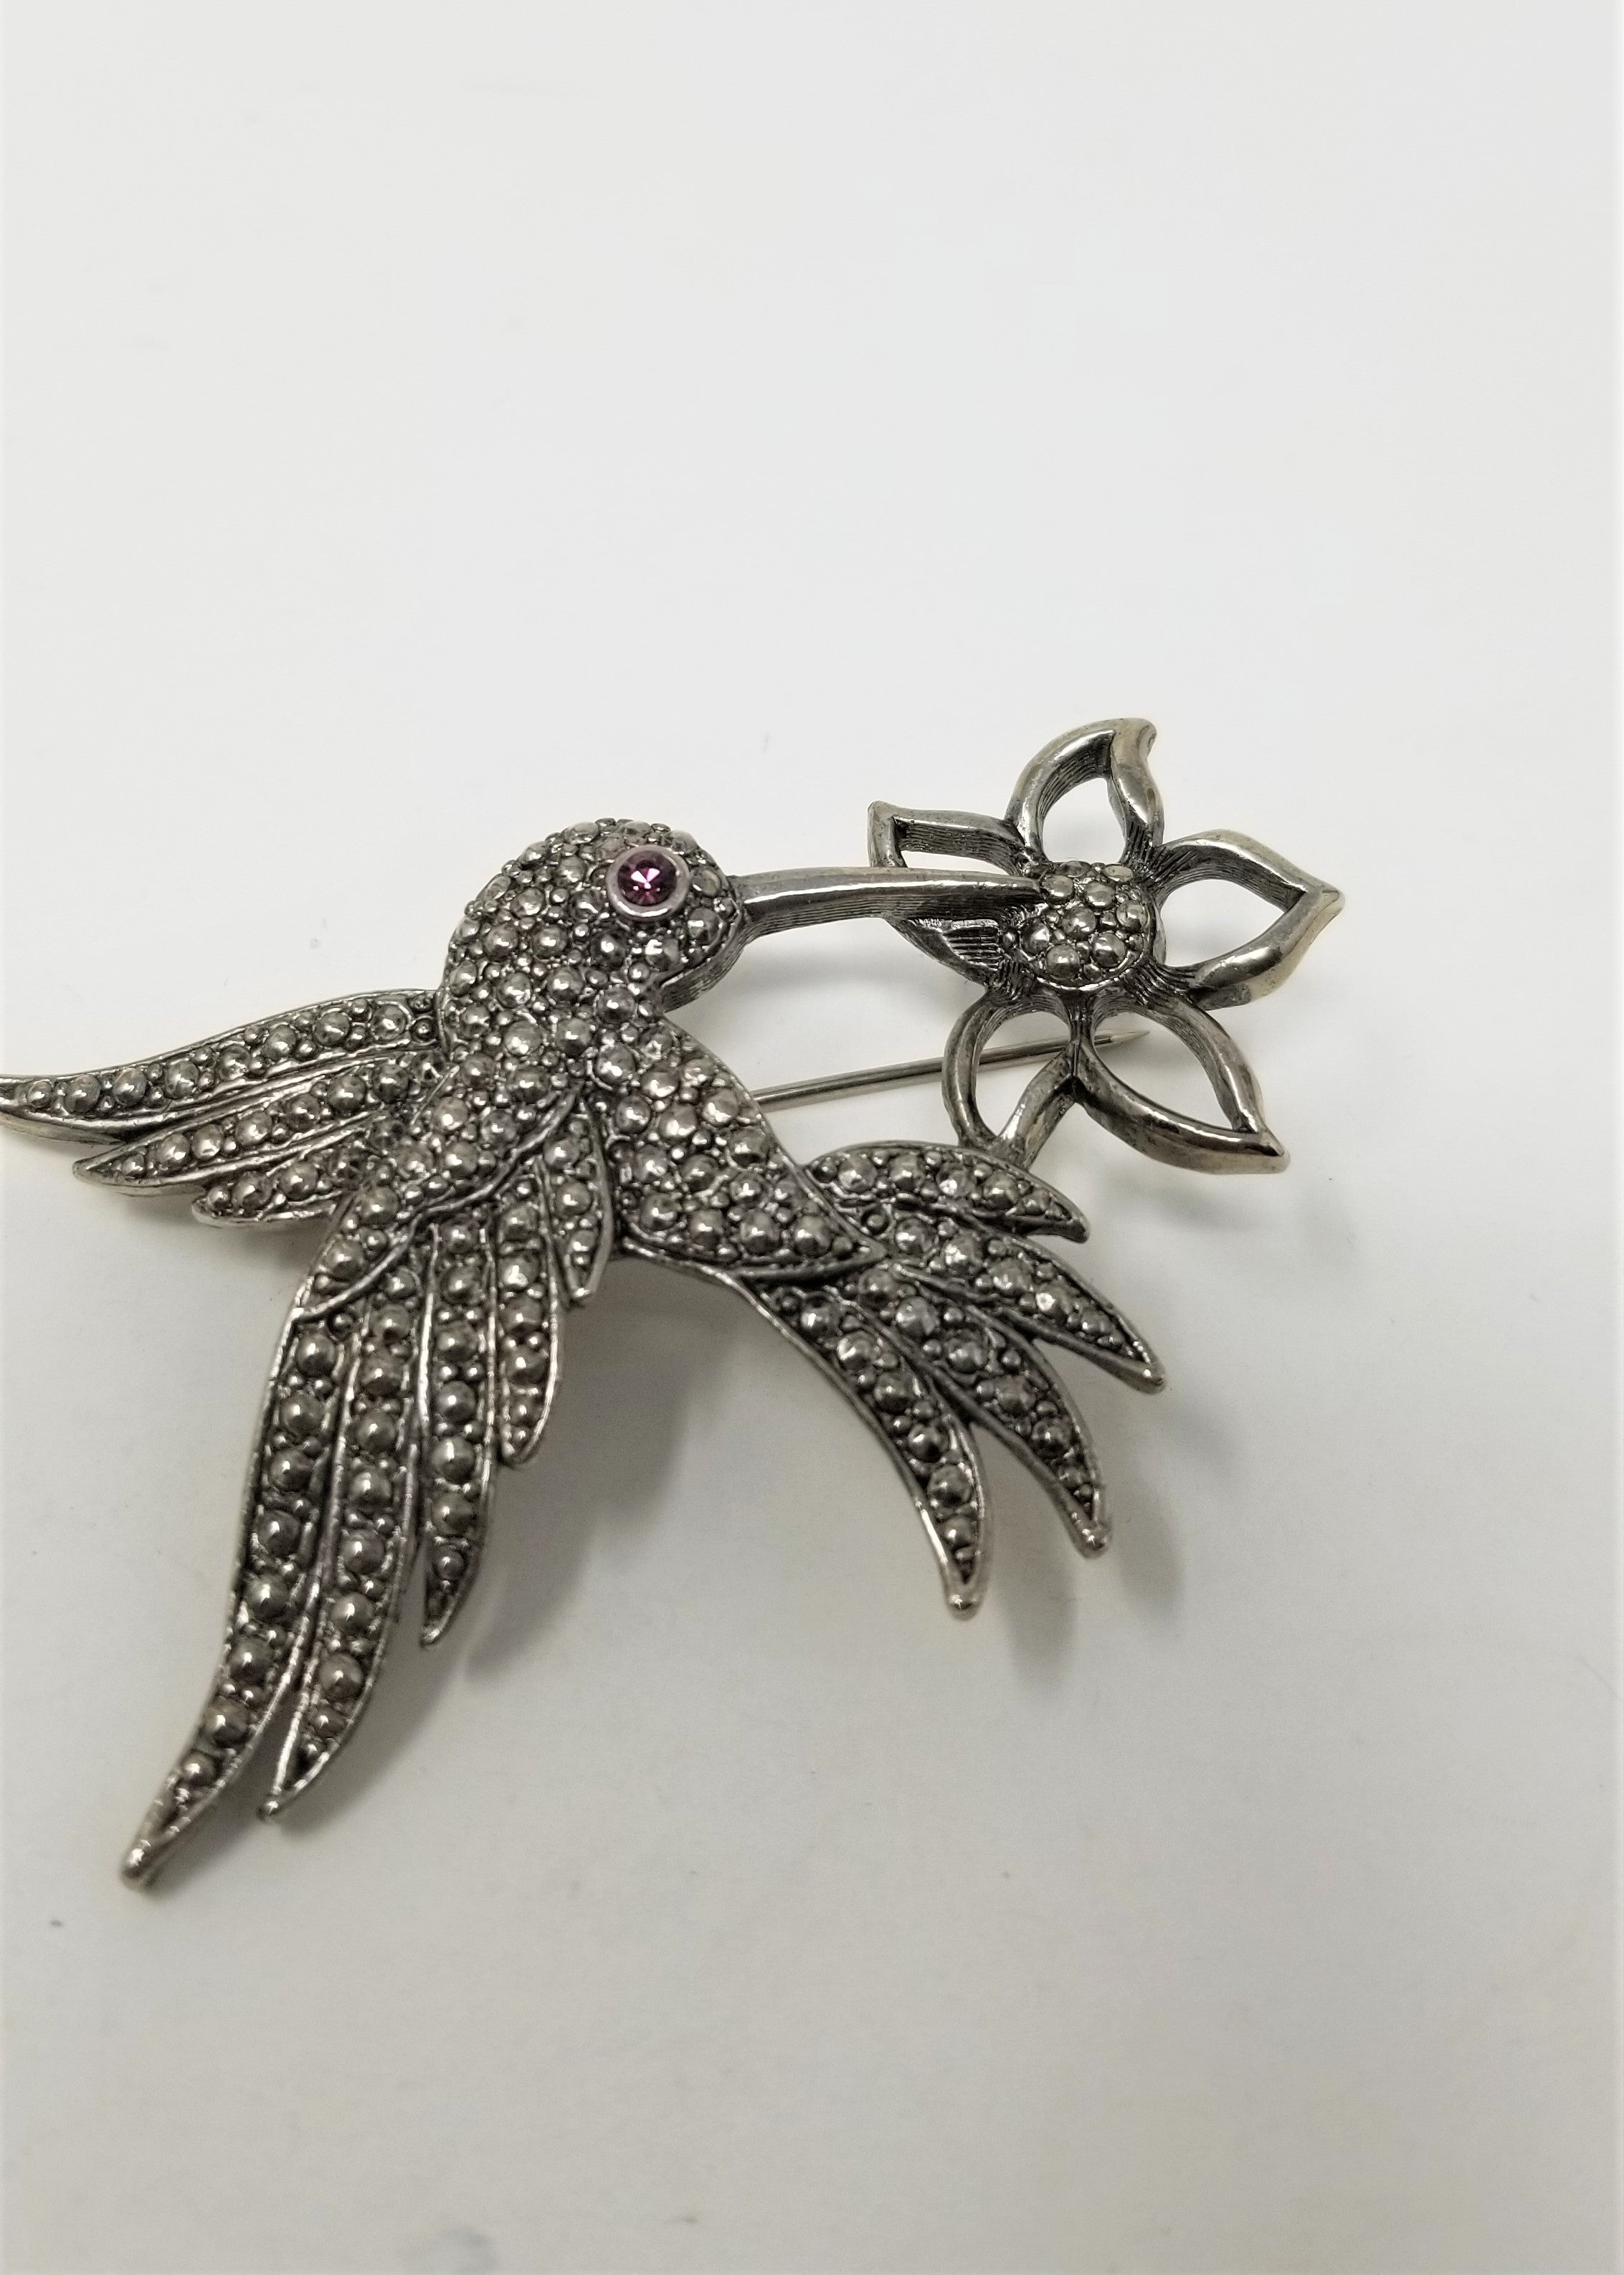 Red Eye Hummingbird Pin Vintage Silver Avon Brooch